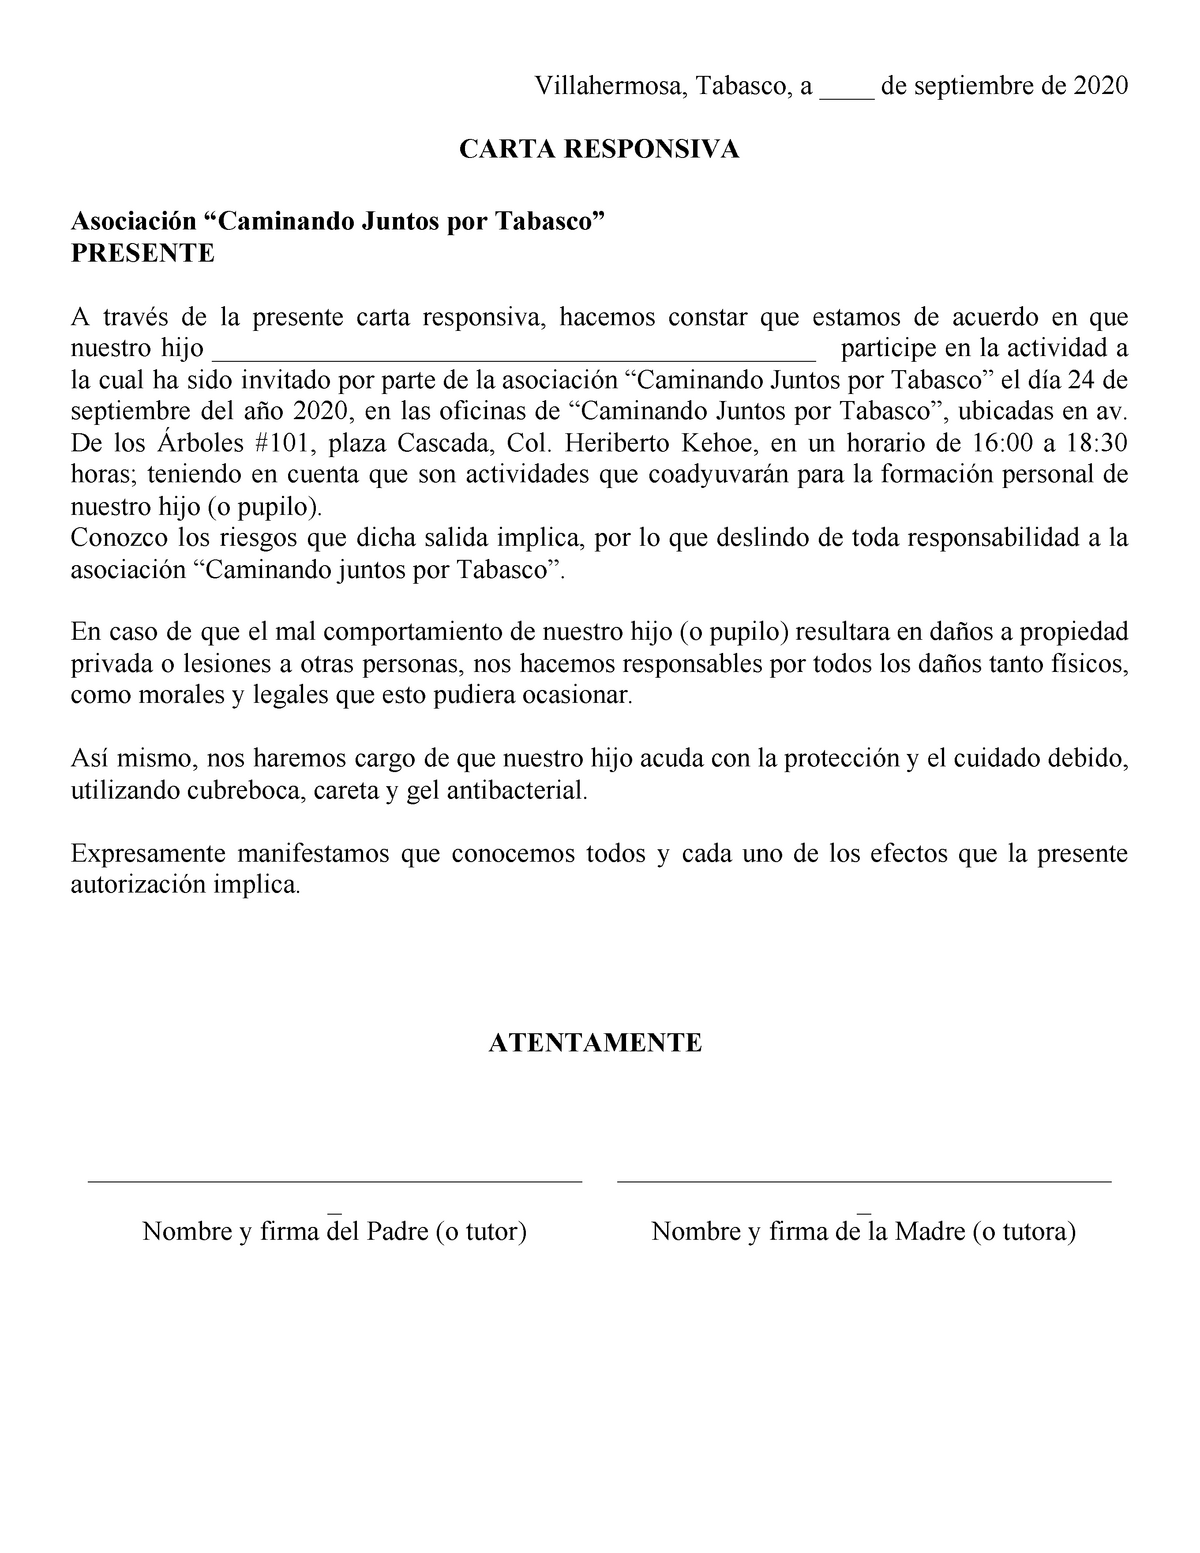 Carta Responsiva visita Caminando Juntos por Tabasco - copia -  Villahermosa, Tabasco, a ____ de - Studocu